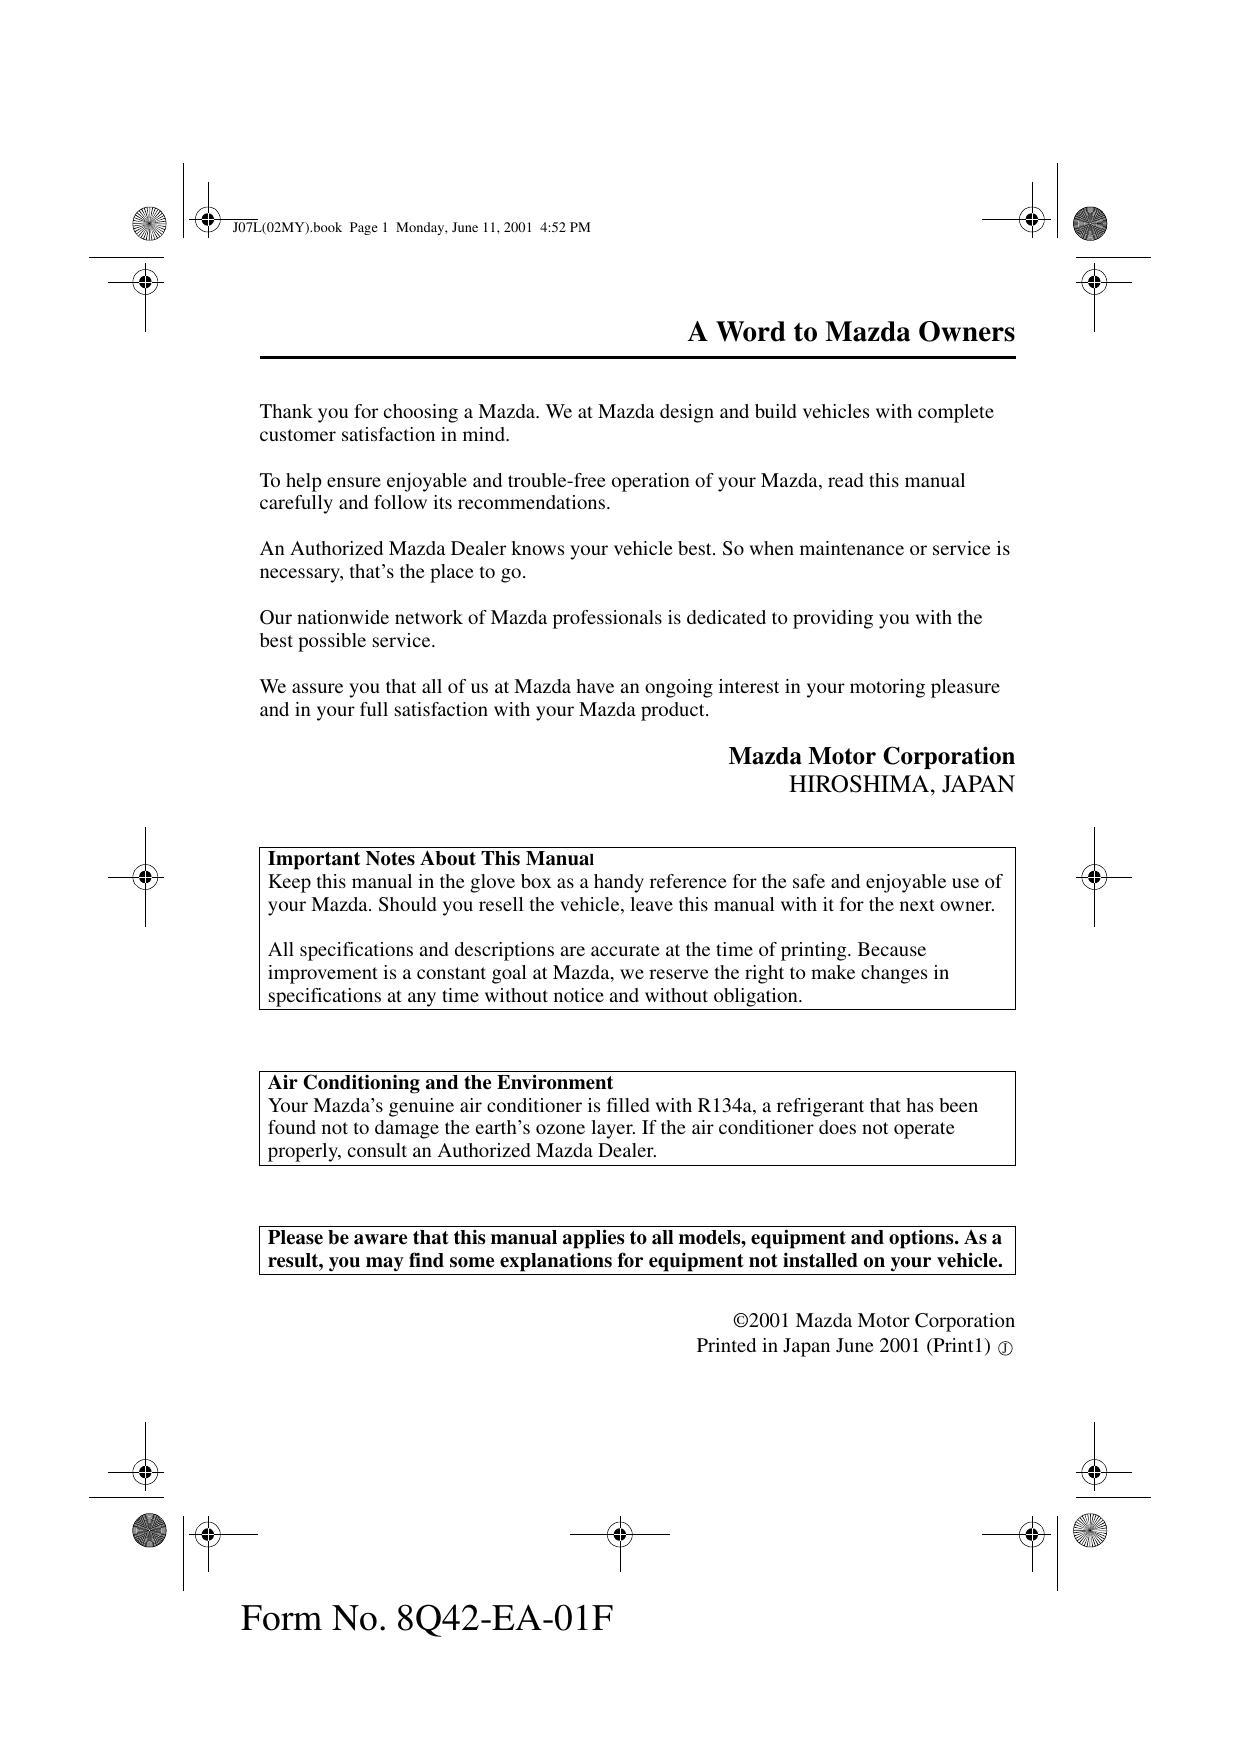 2001-mazda-owners-manual.pdf